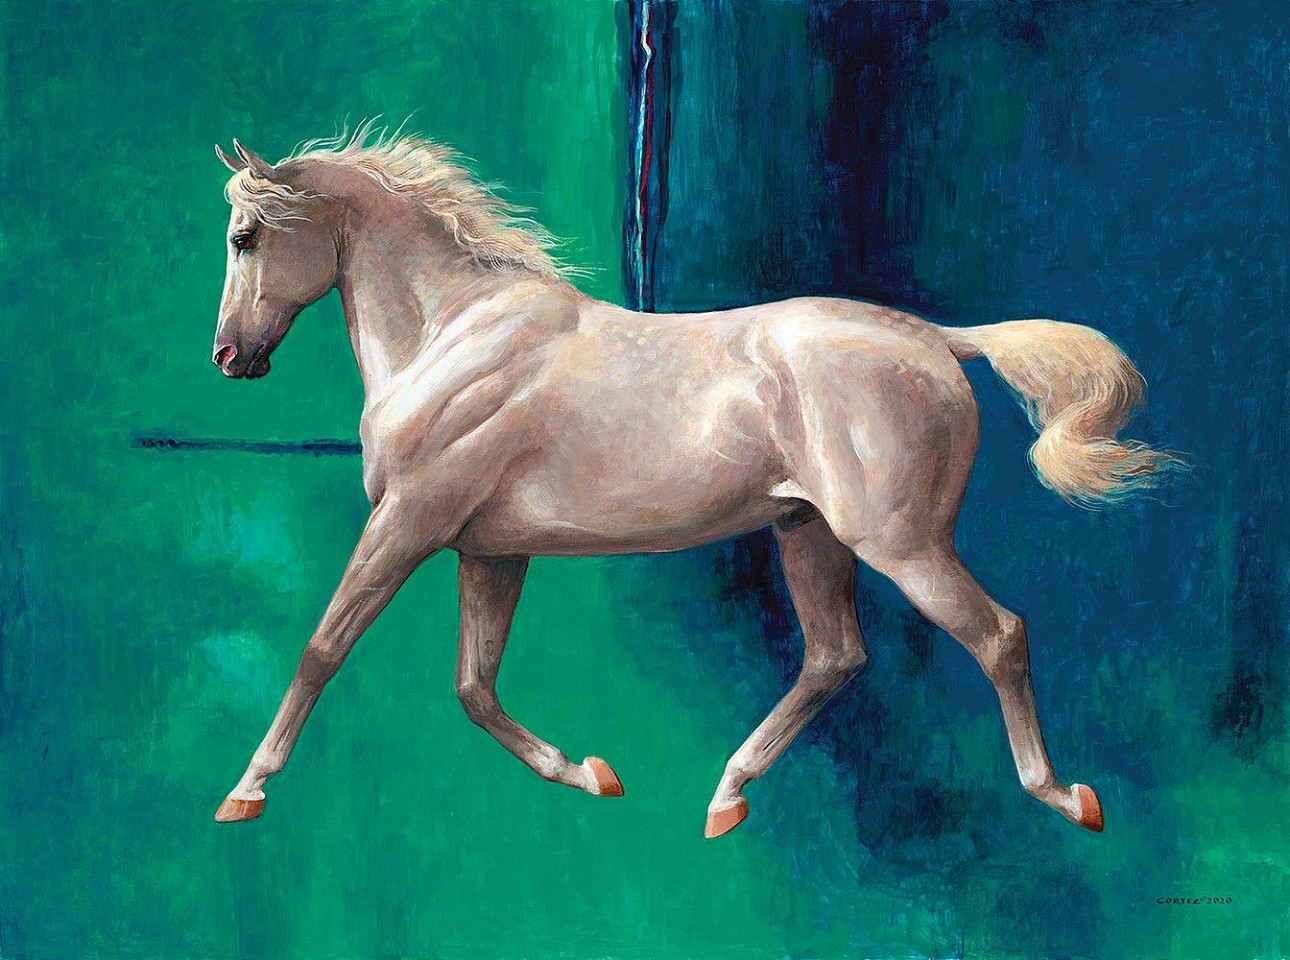 Jenness Cortez, The Whitest Horse Blue #1, 2020
acrylic on mahogany panel, 30 x 40 in. (76.2 x 101.6 cm)
JC200201